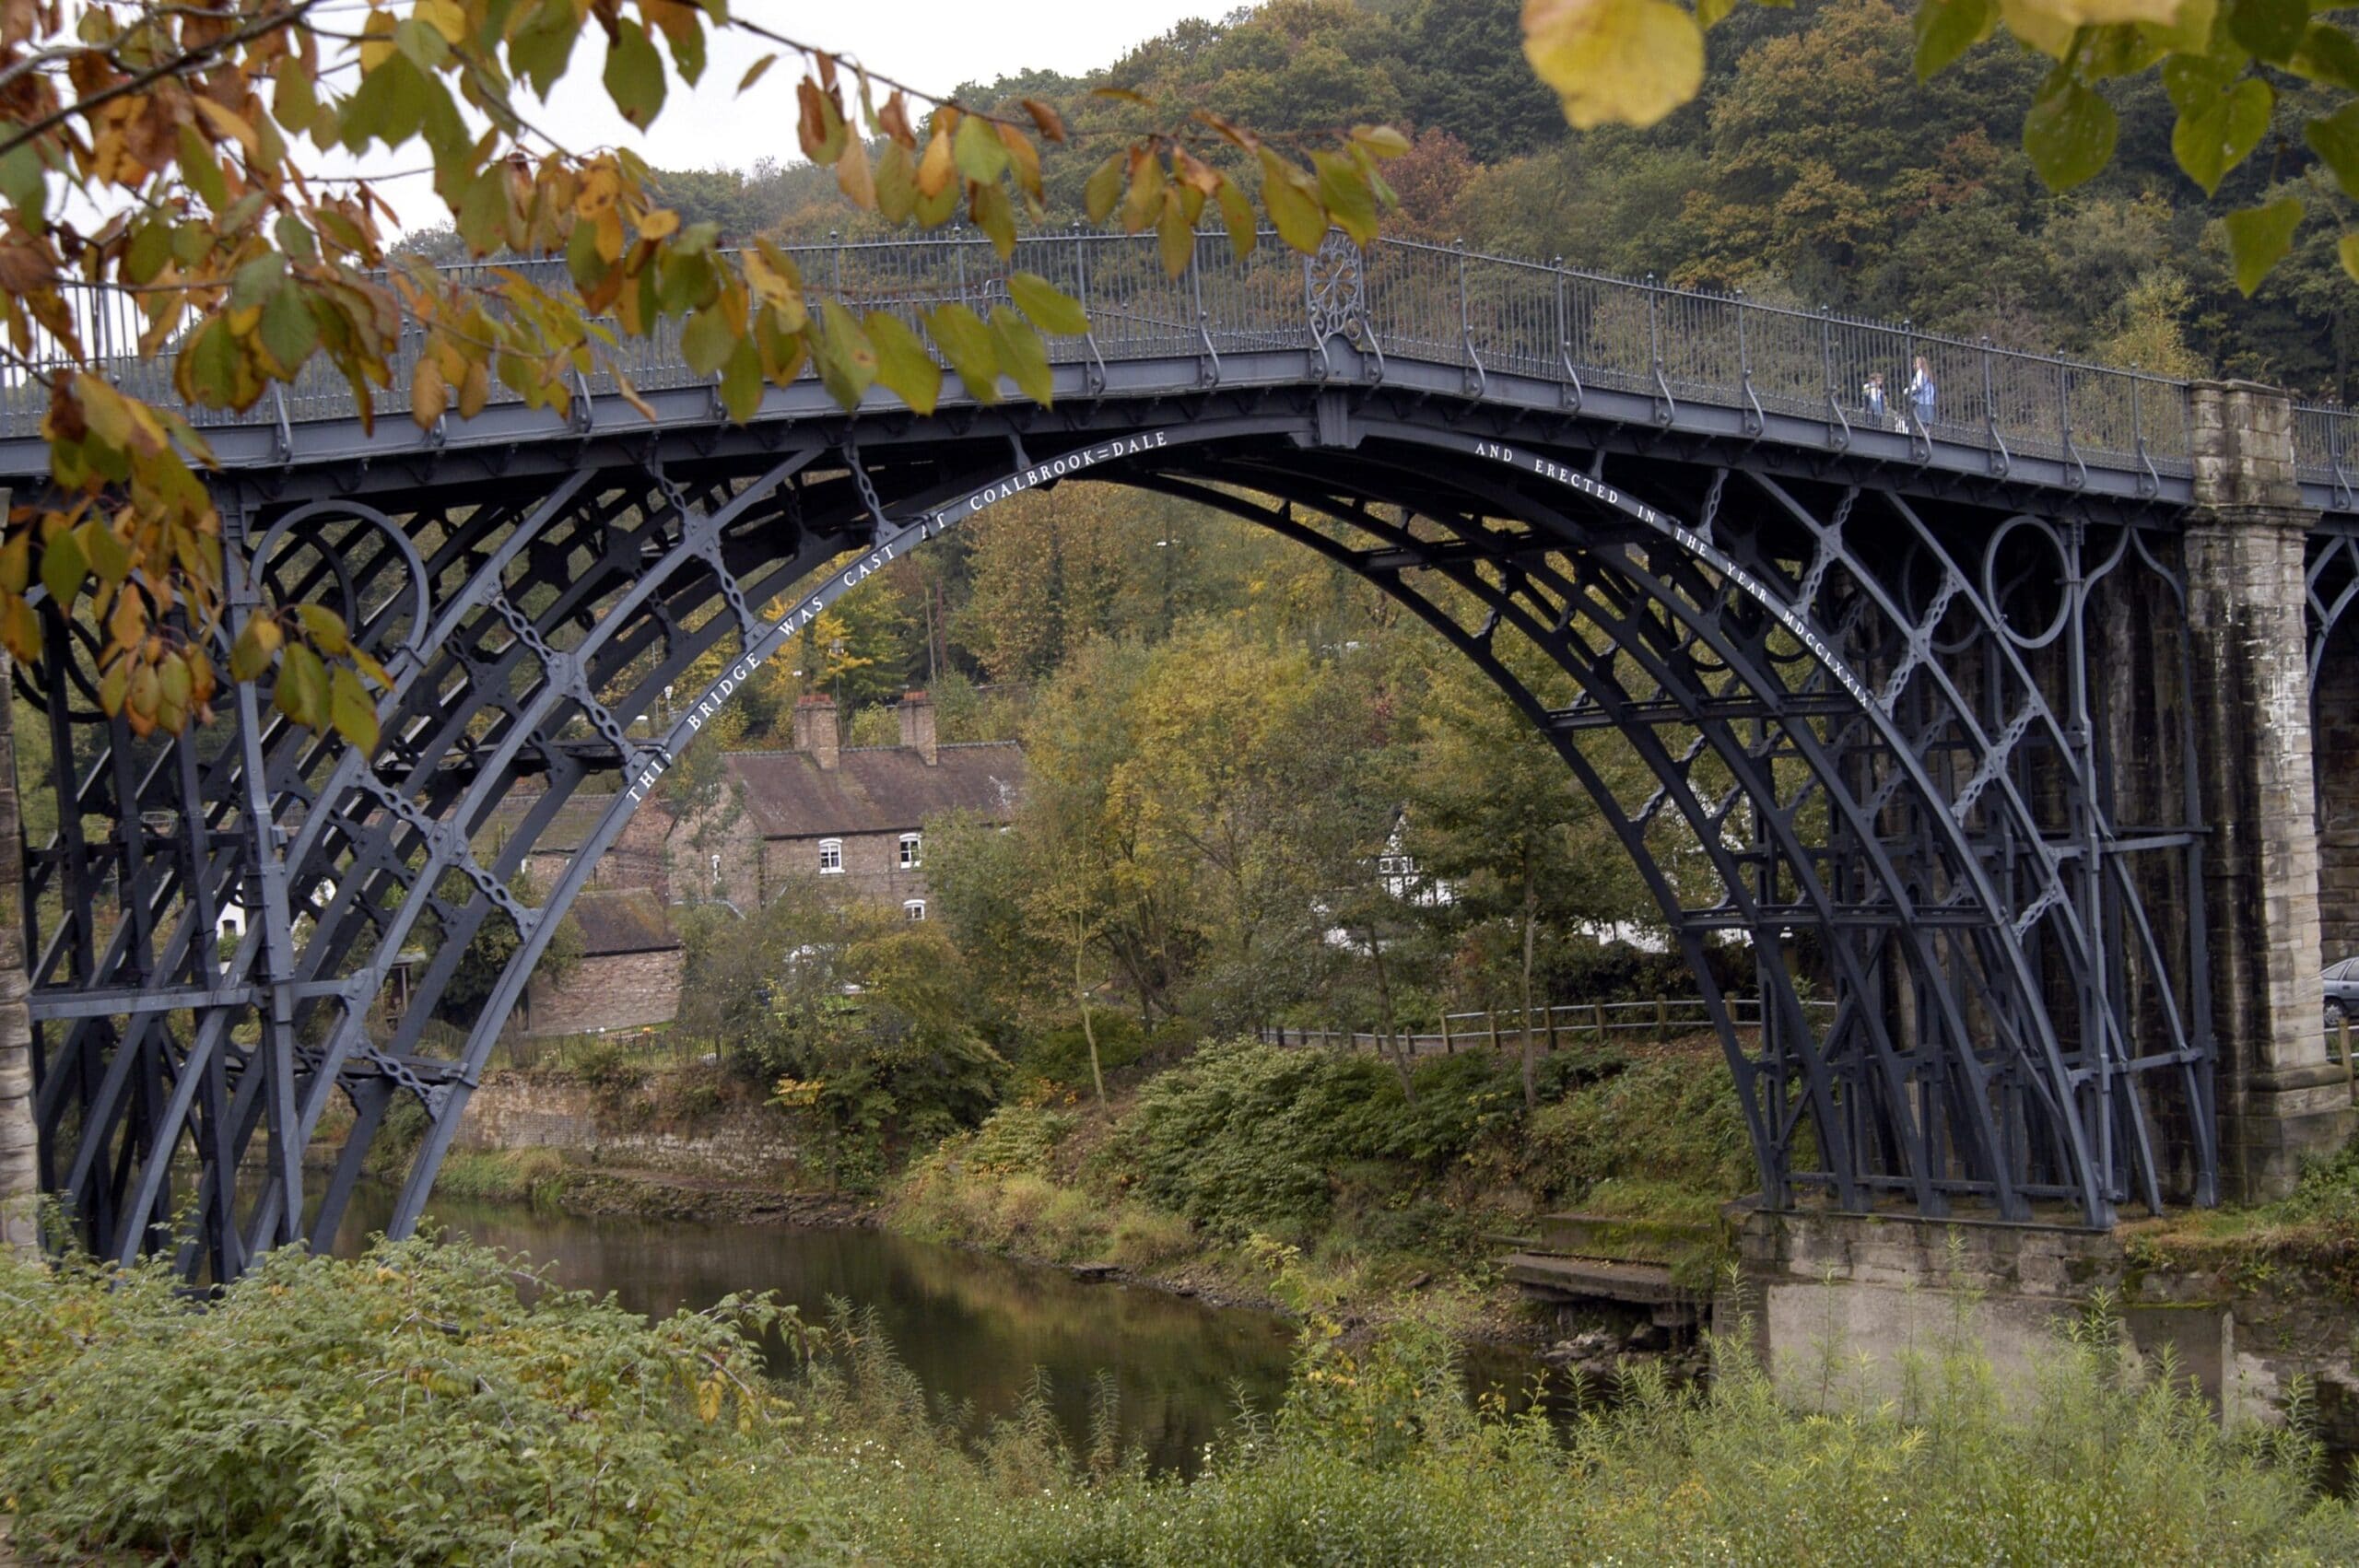 Imagen de fotograma completo del Puente de Hierro, Ironbridge, Inglaterra